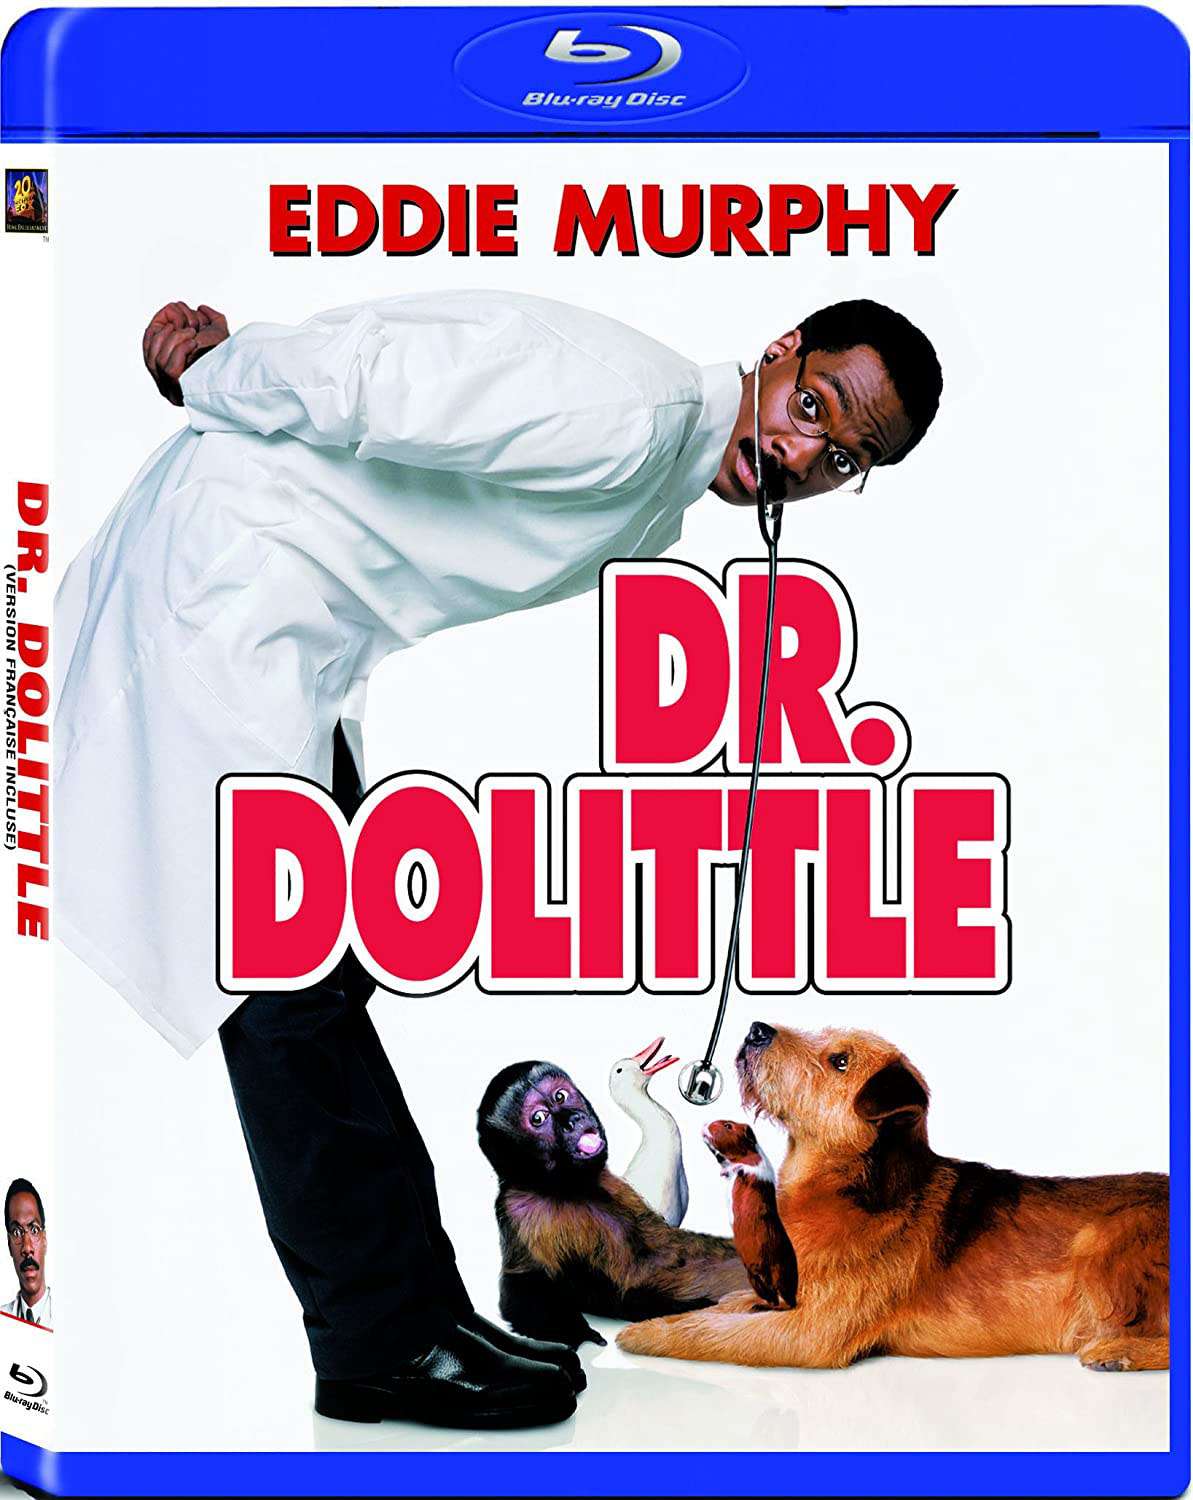 Il dottor Dolittle (1998) FullHD BDRip 1080p Ac3 ITA (DVD Resync) DTS-HD MA Ac3 ENG Subs - Krikk